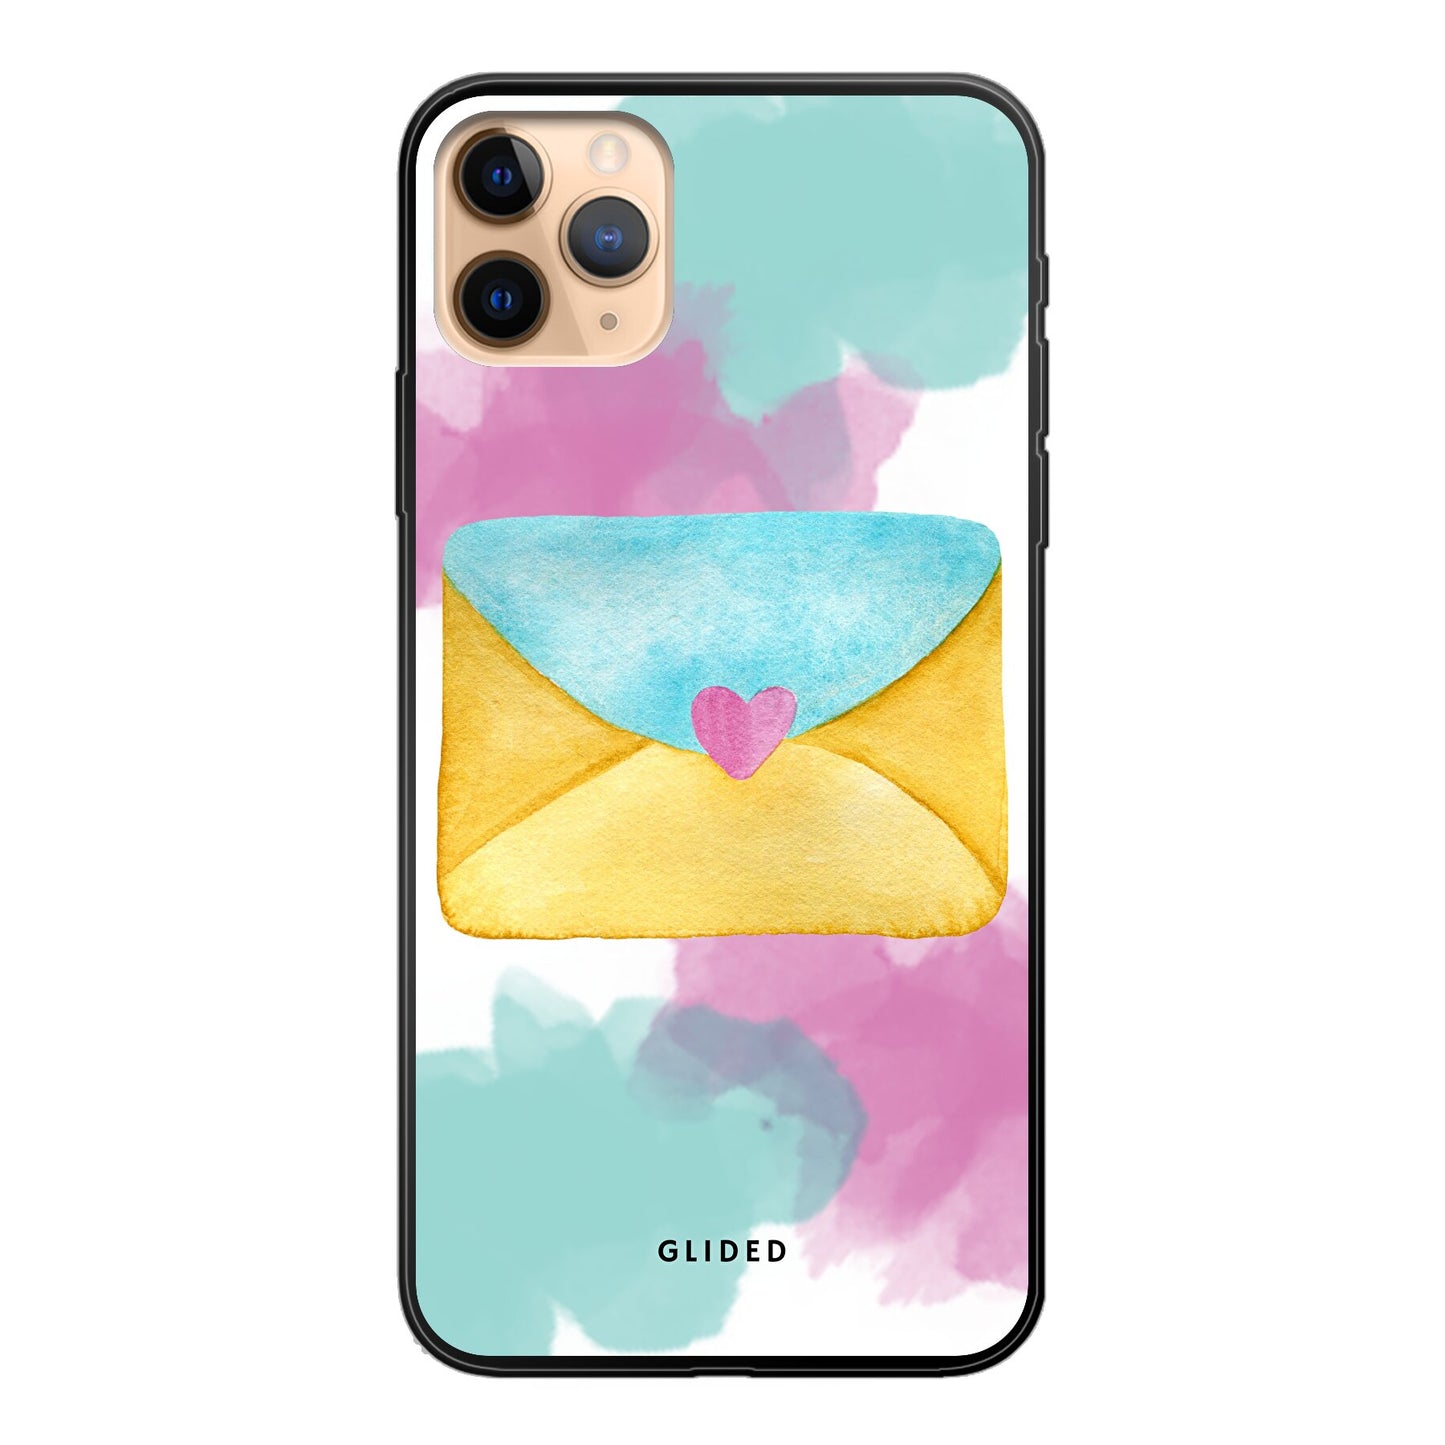 Envelope - iPhone 11 Pro Max - Soft case